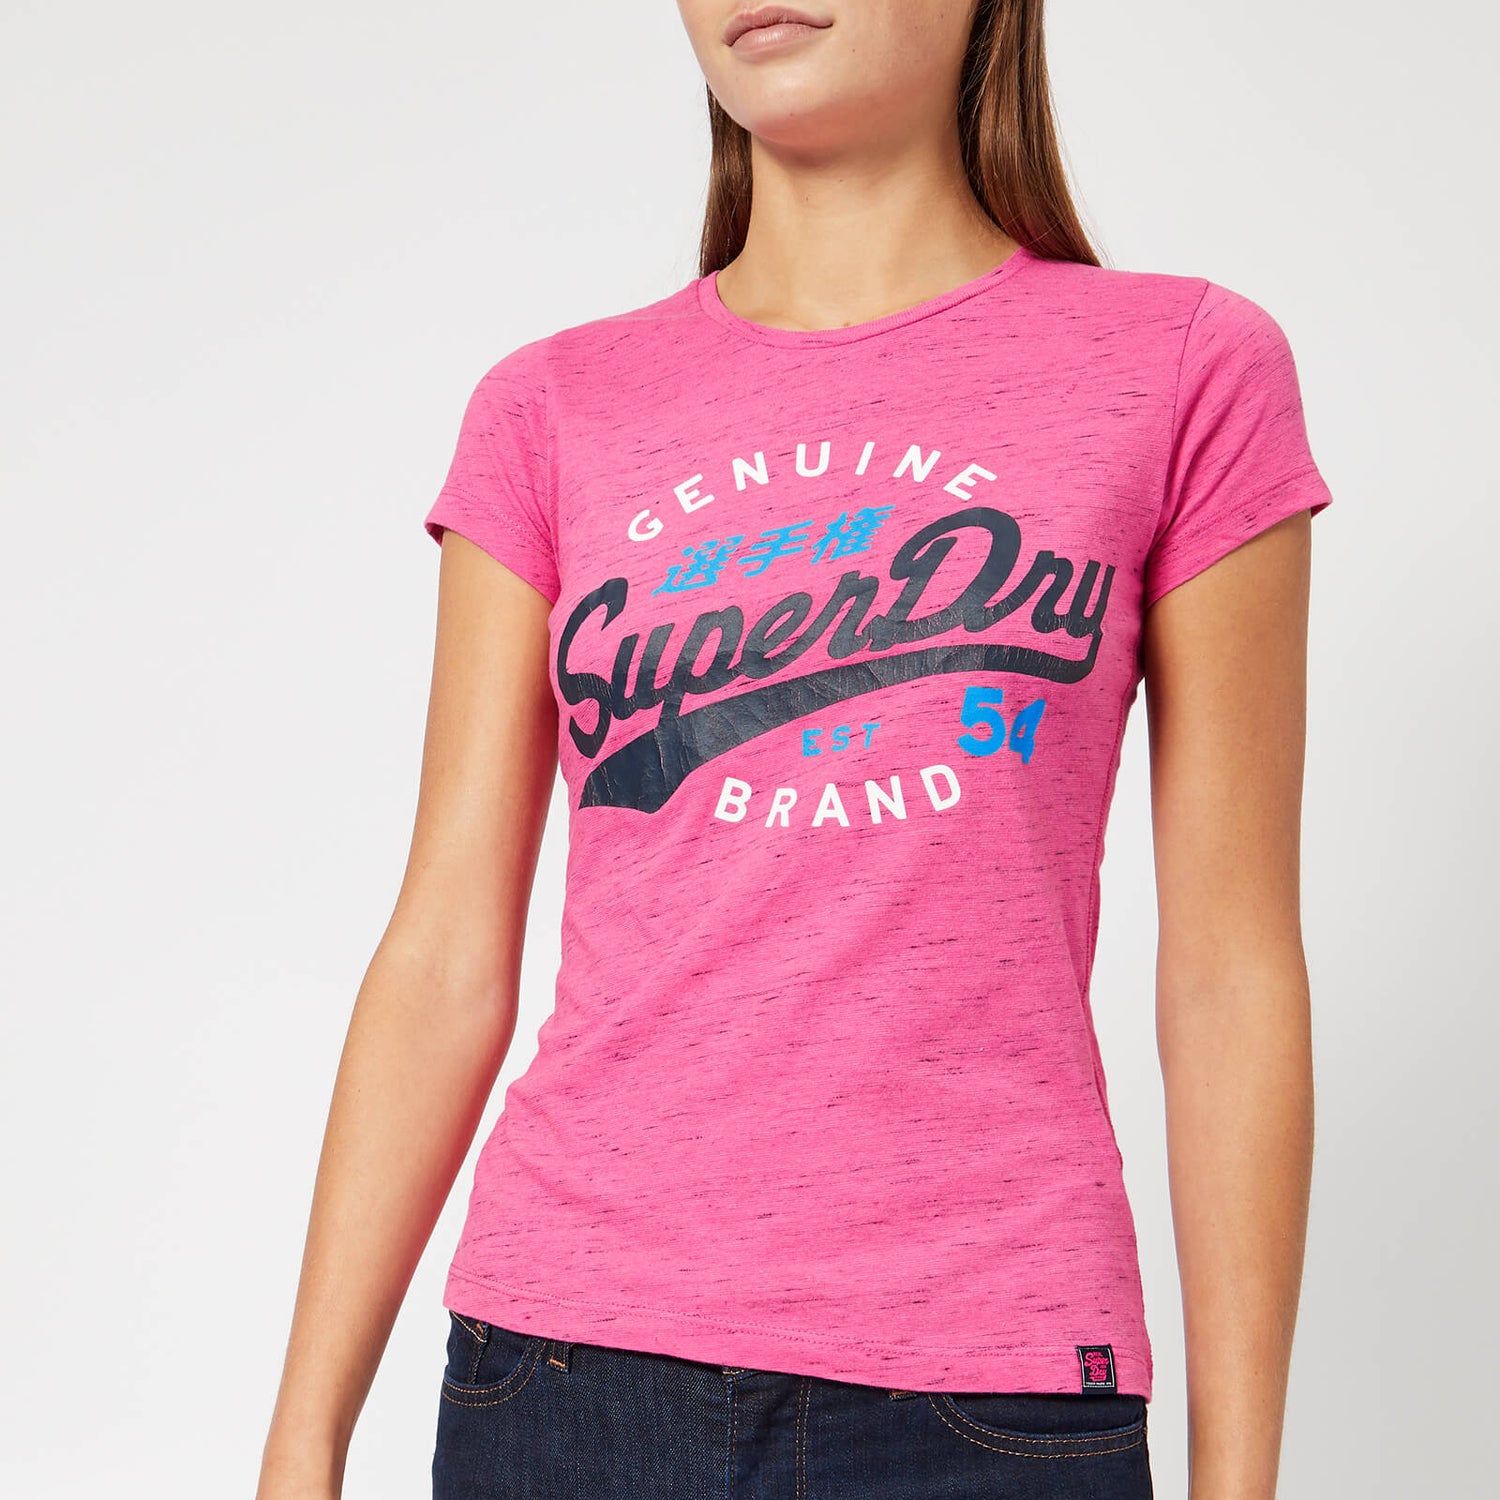 stamtavle Microbe der ovre Superdry Women's SD 54 Entry T-Shirt - Fluro Pink Snowy | TheHut.com